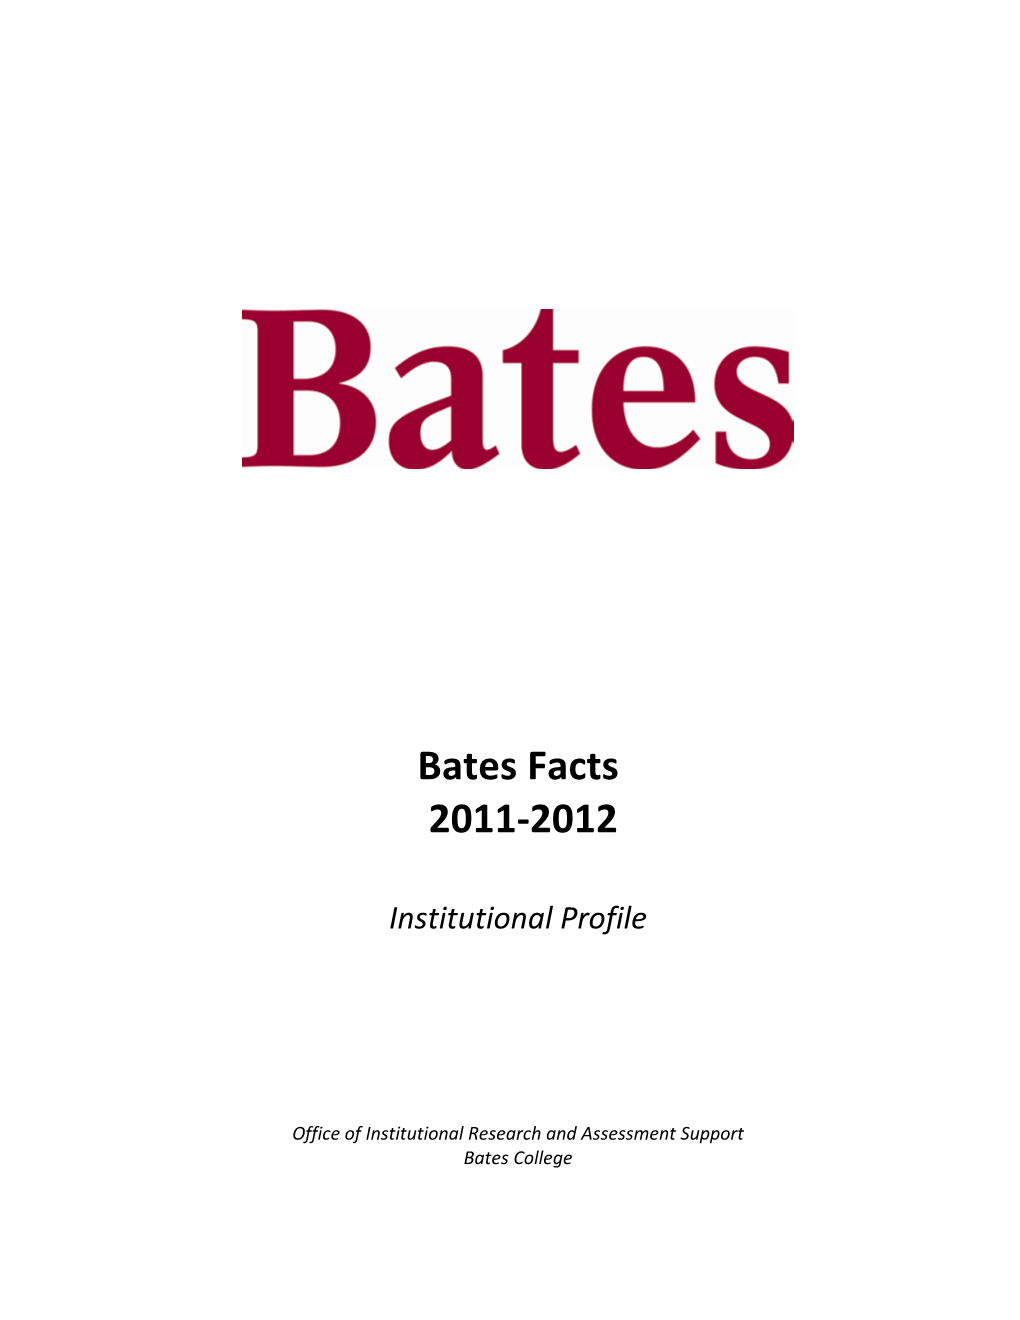 Bates Facts 2011-2012